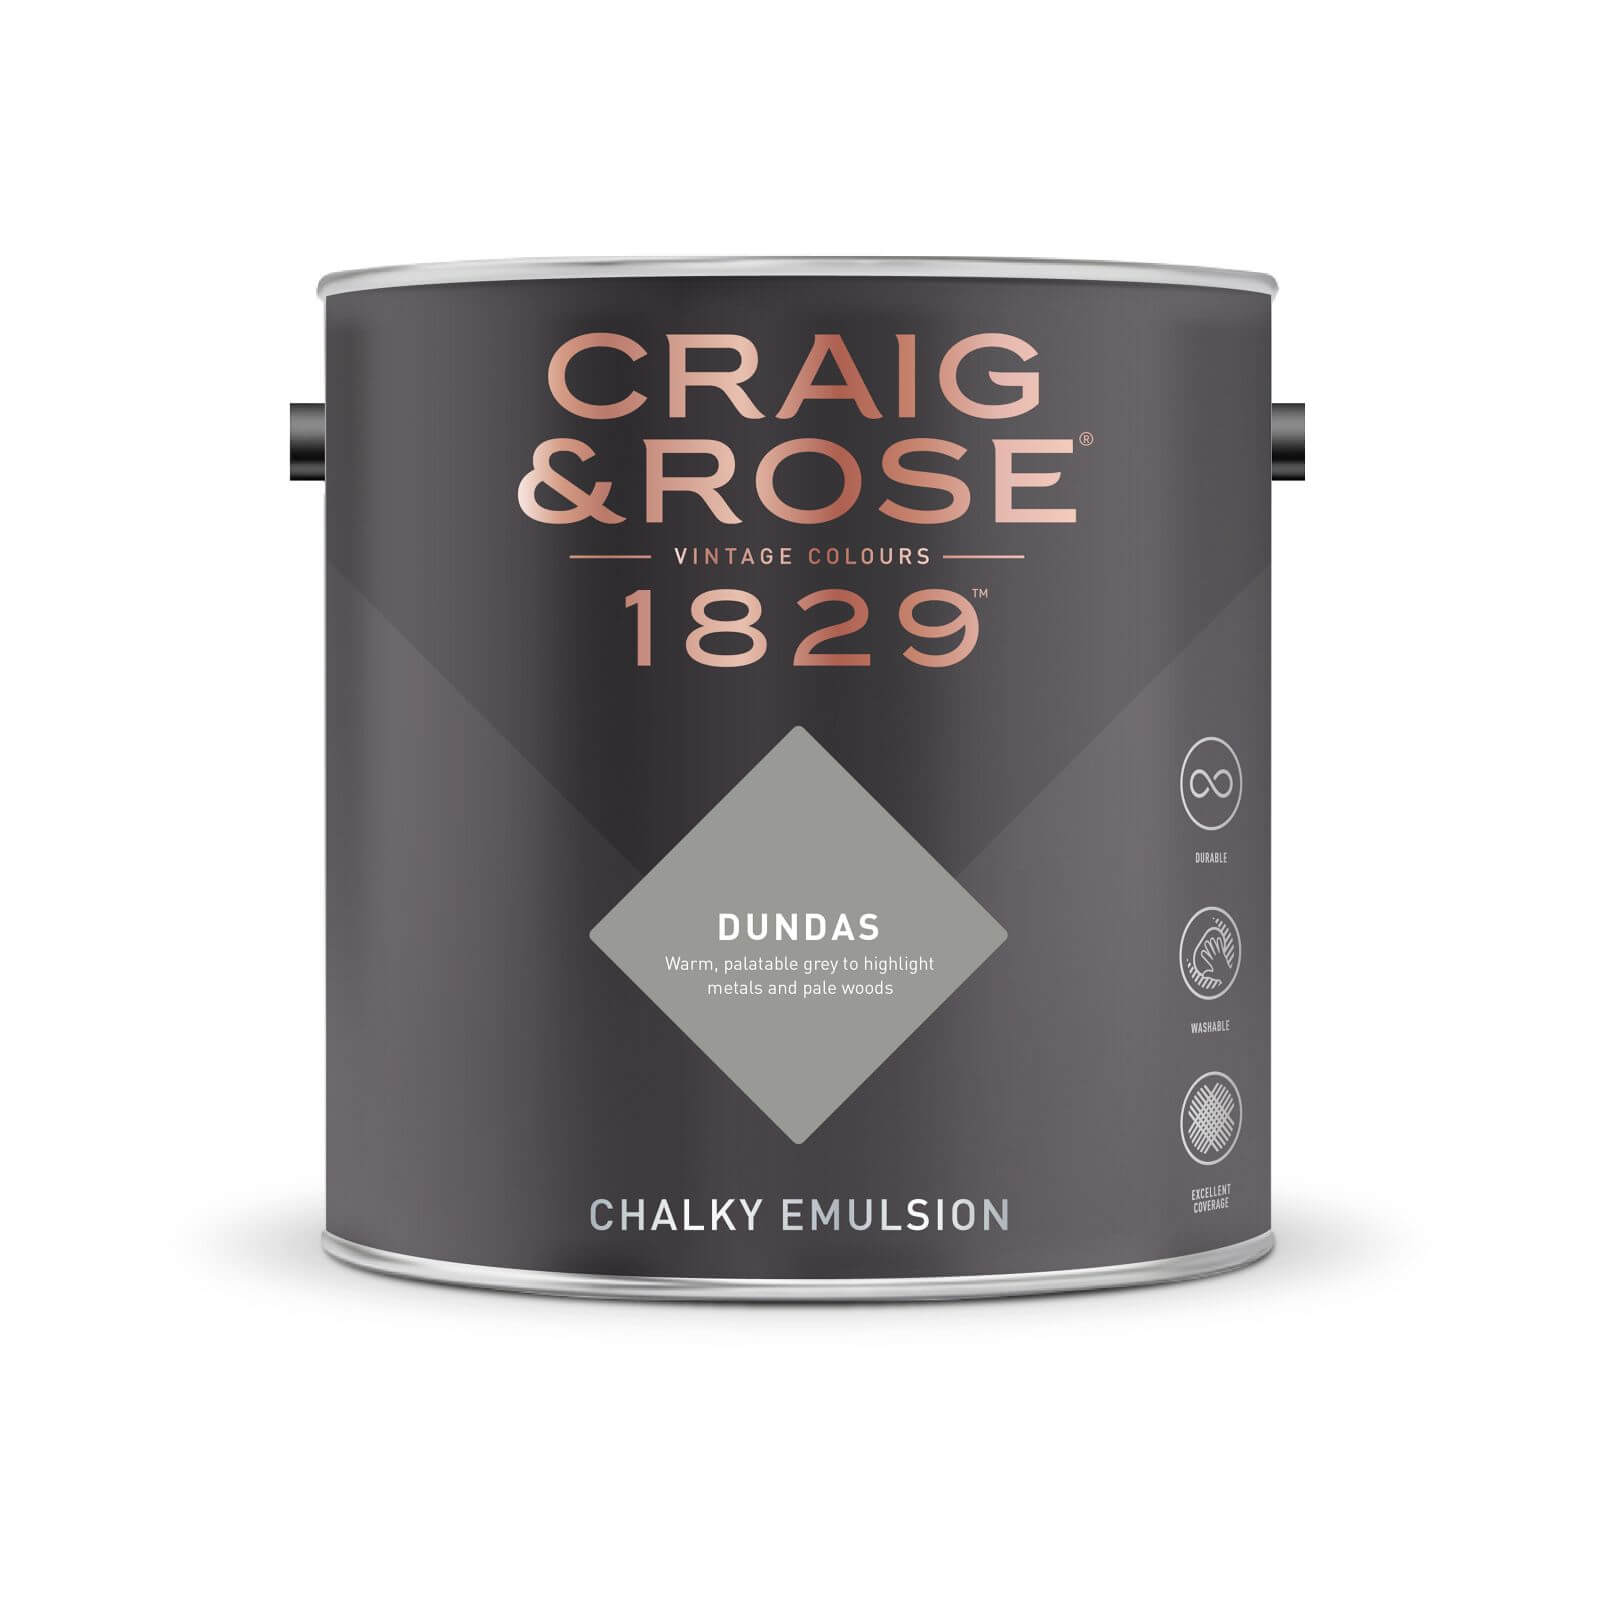 Craig & Rose 1829 Chalky Emulsion Paint Dundas - 2.5L